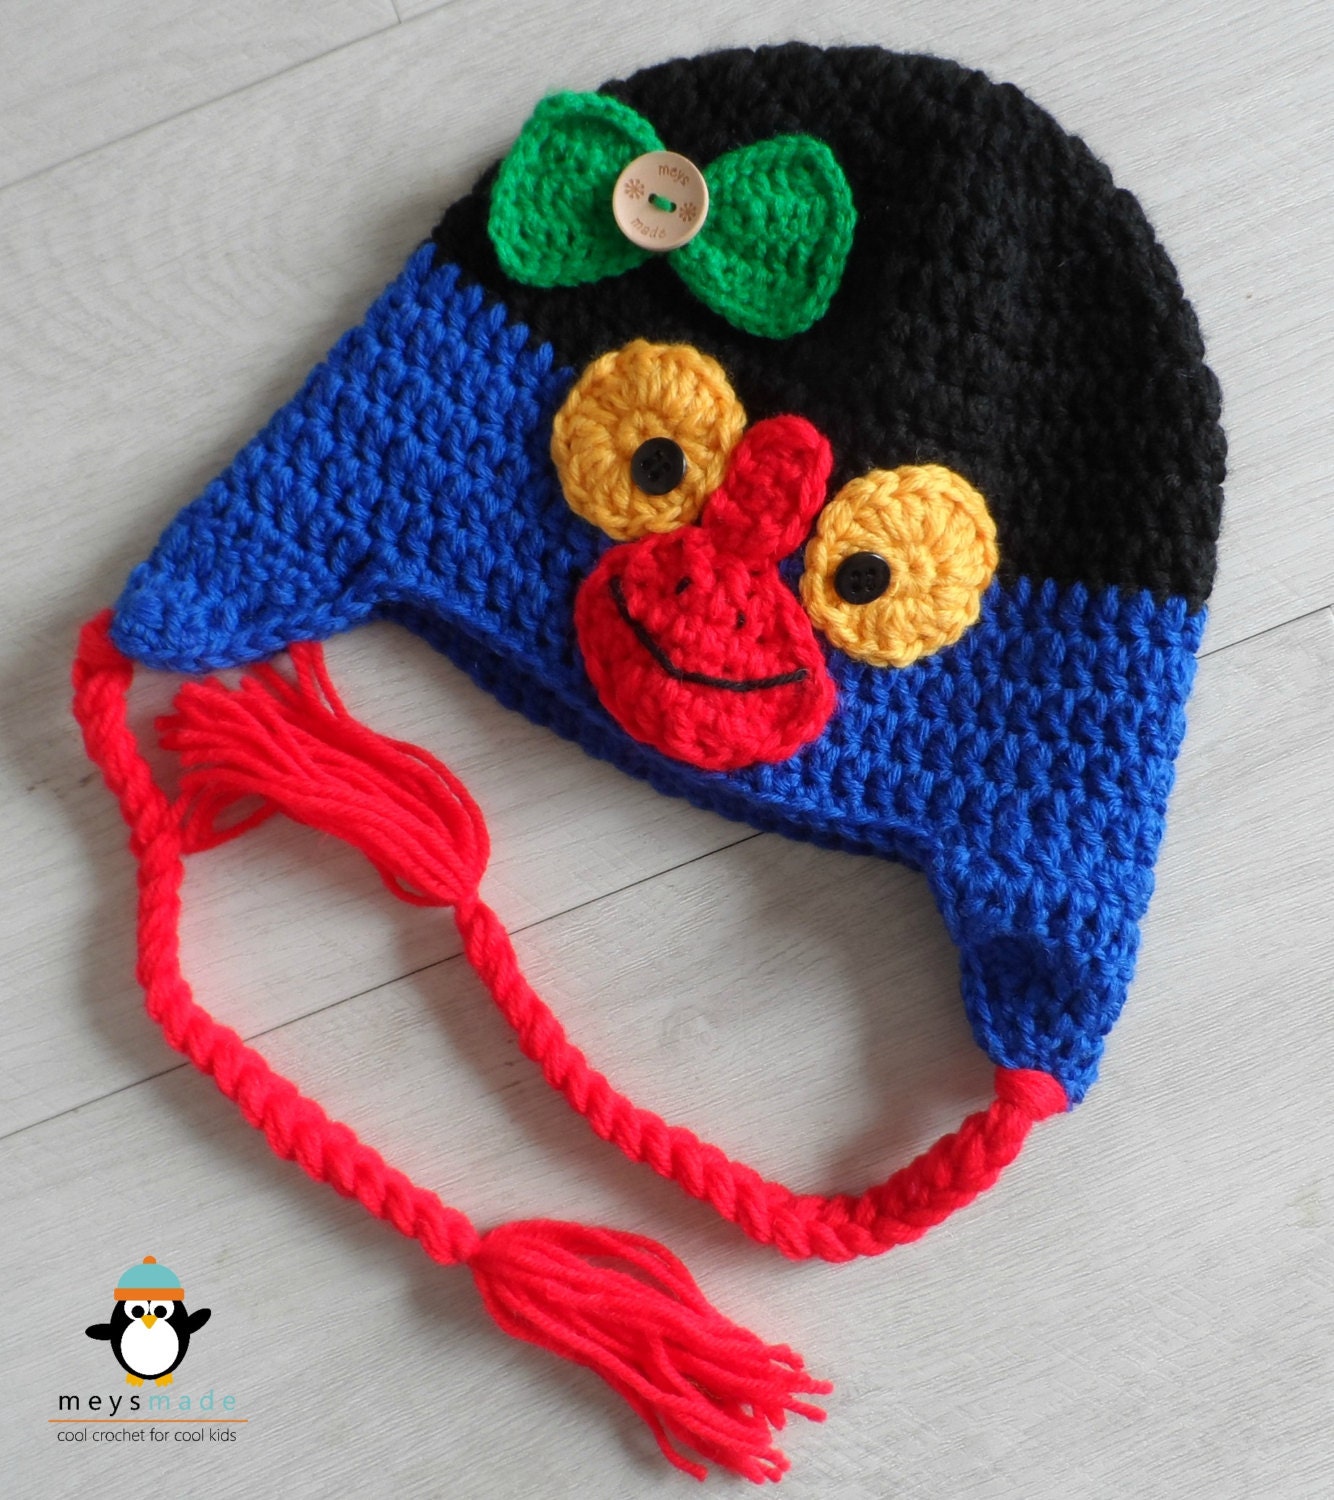 Crochet Pukeko Hat - Made to order - Kiwiana - Photo prop, gift, or unique accessory - MeysMadeCoolCrochet